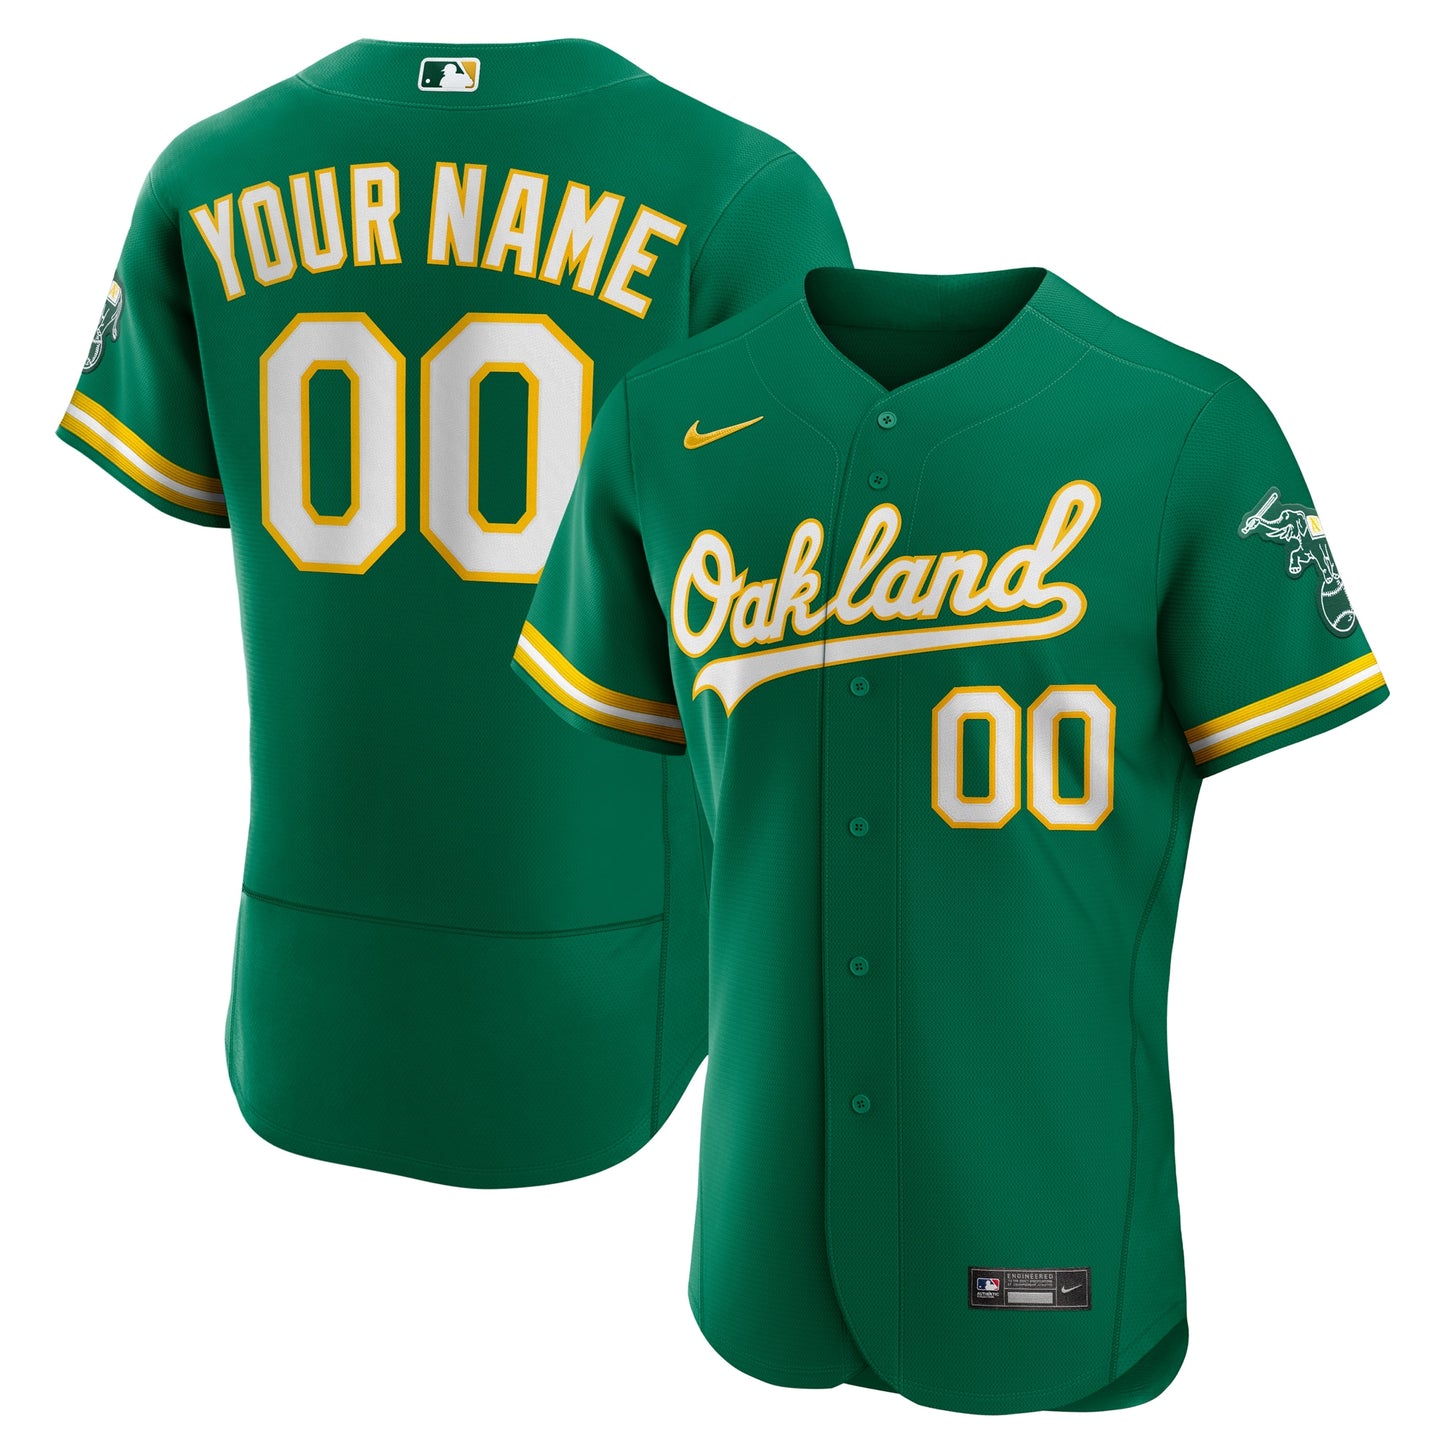 Oakland Athletics Nike Alternate Authentic Custom Jersey - Kelly Green